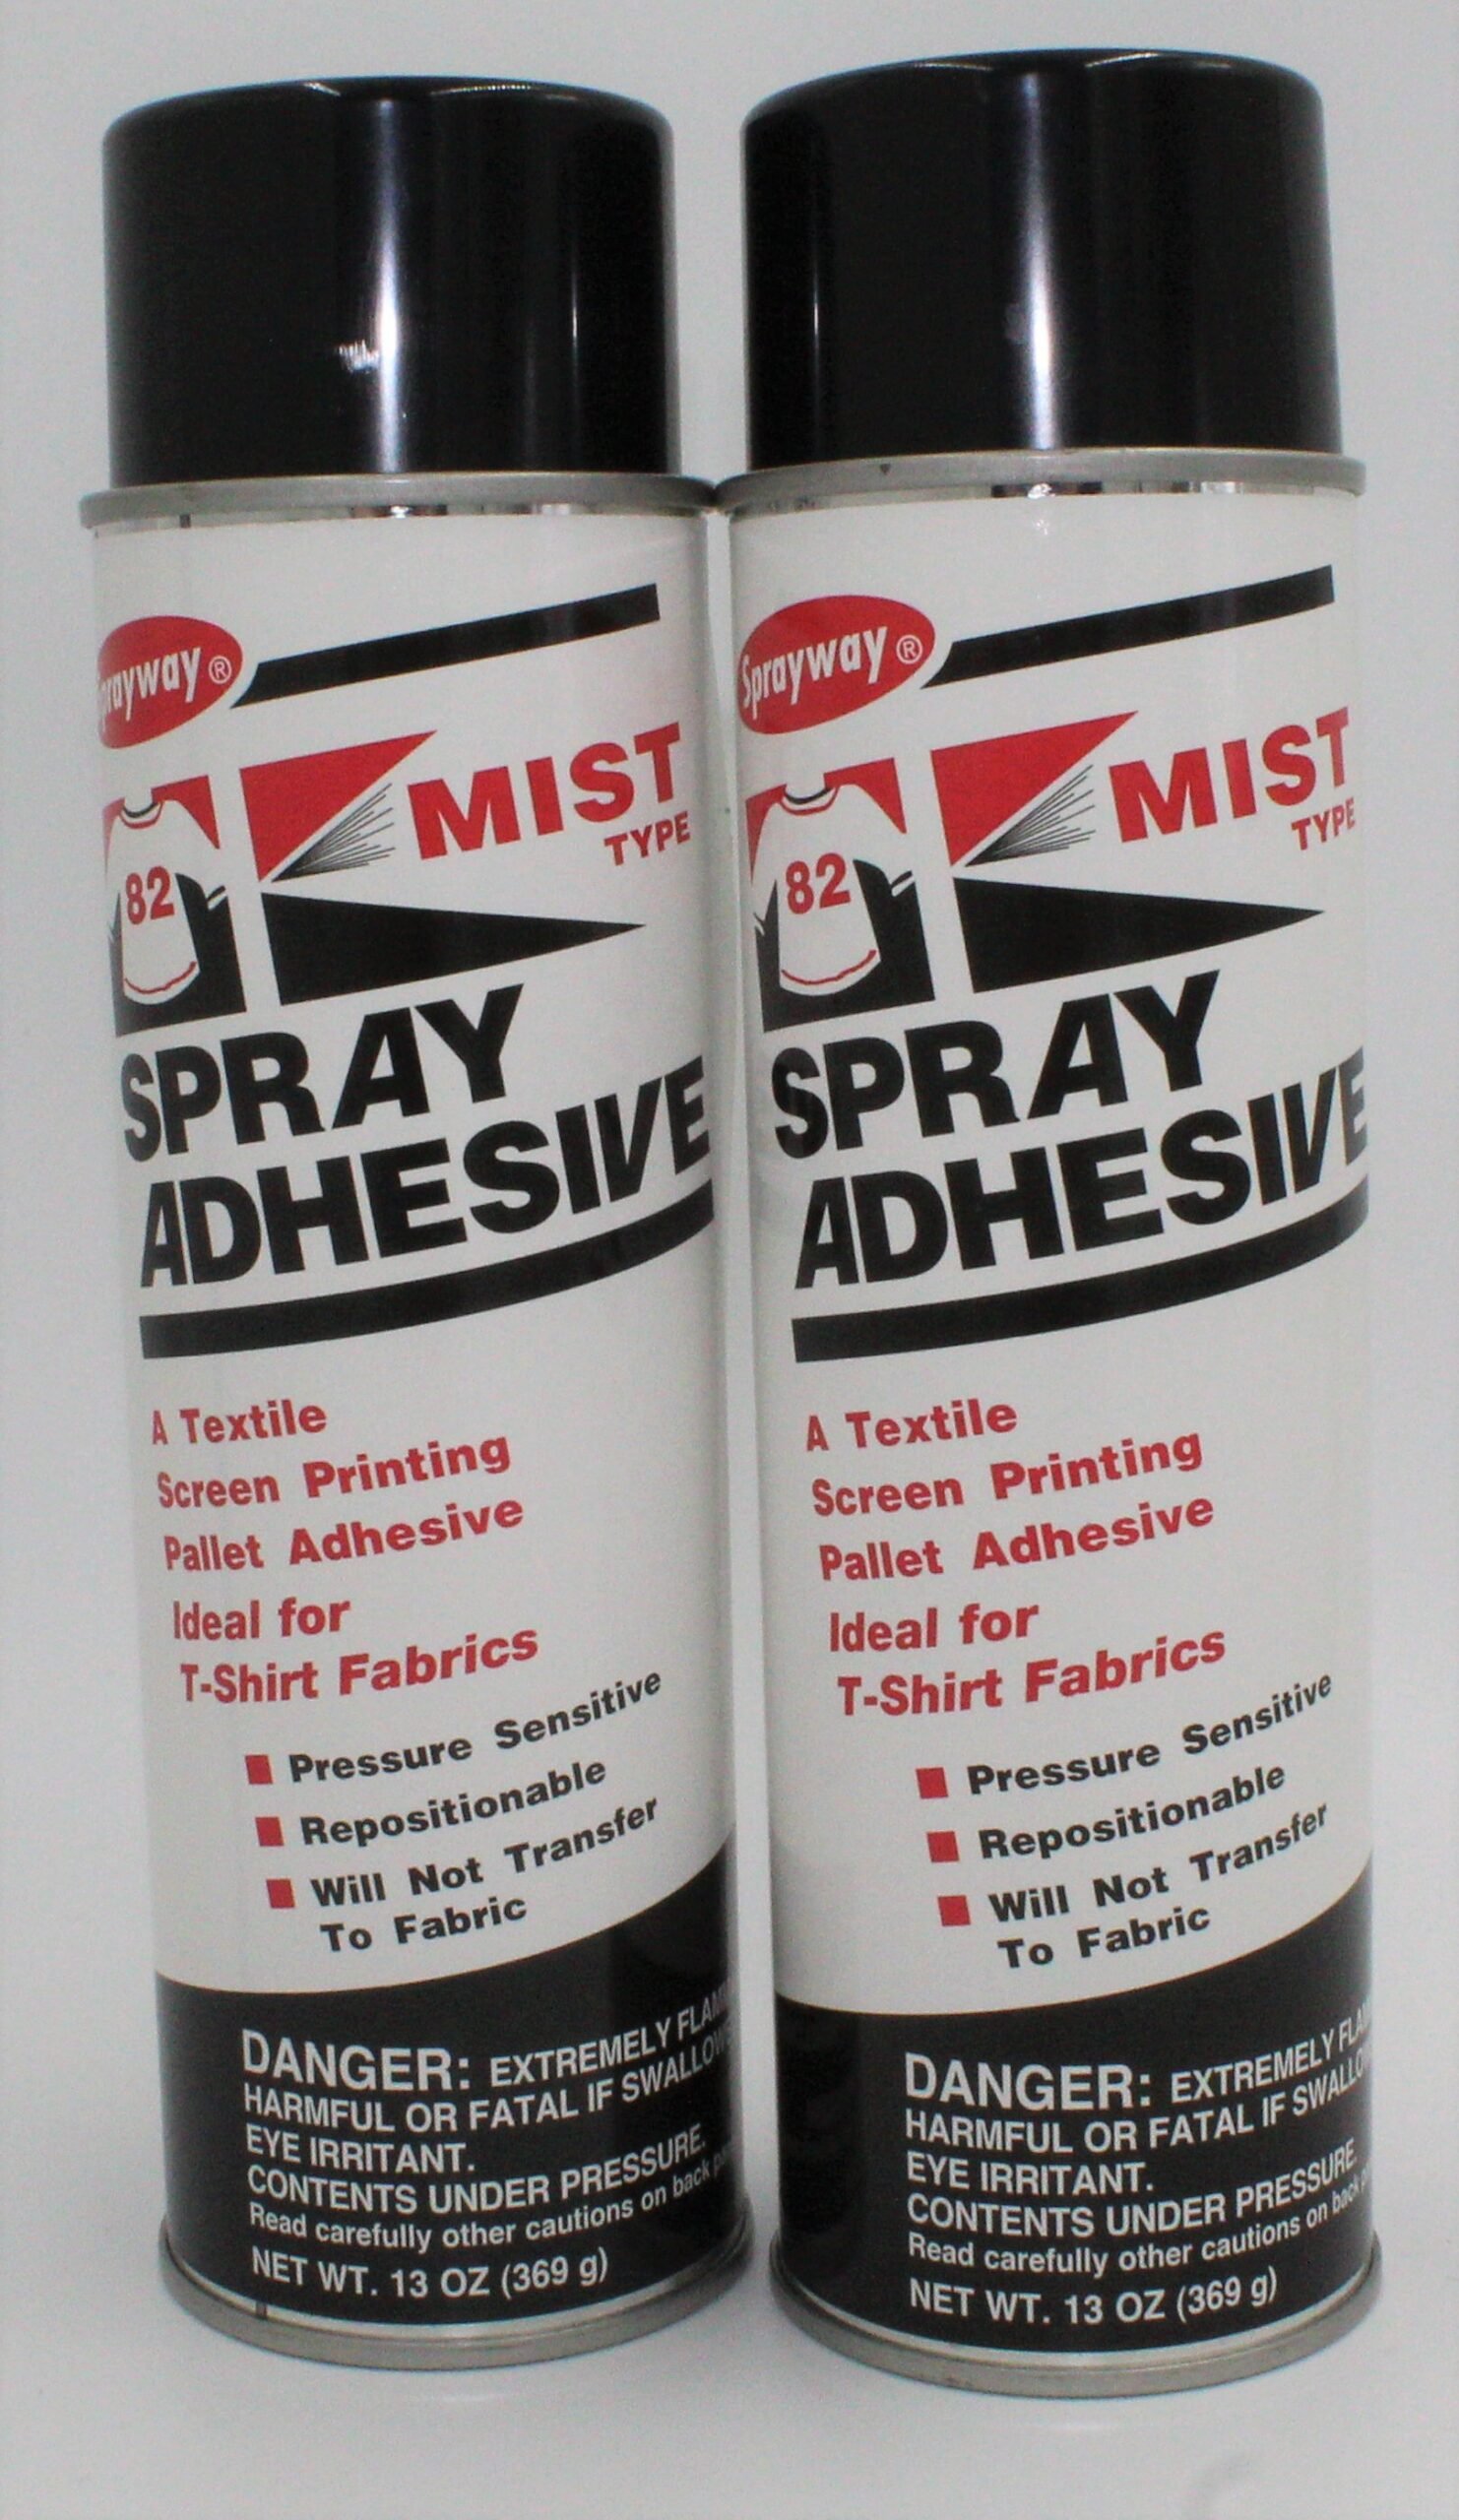 Sprayway 082 Mist Type Spray Adhesive 13 oz